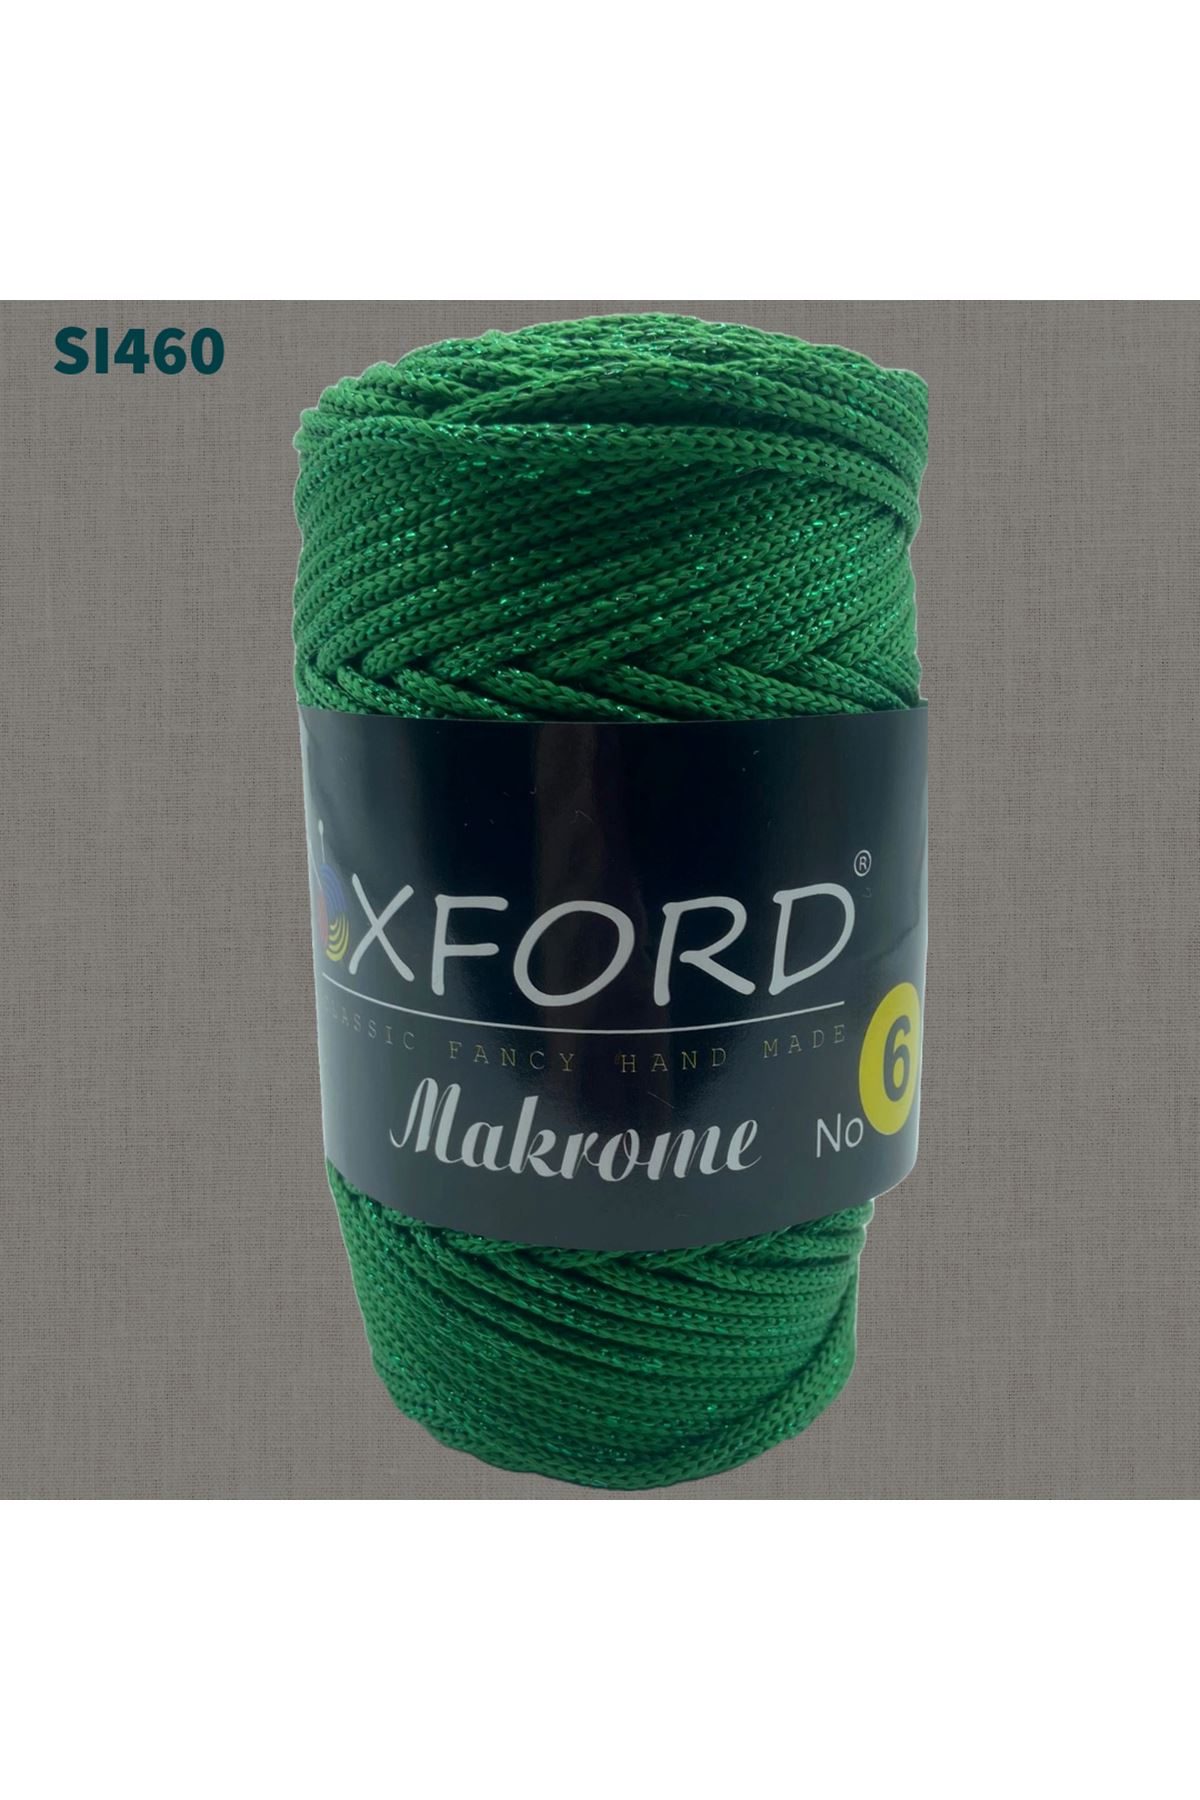 Oxford 6 No SİMLİ Makrome - SI460 Yeşil